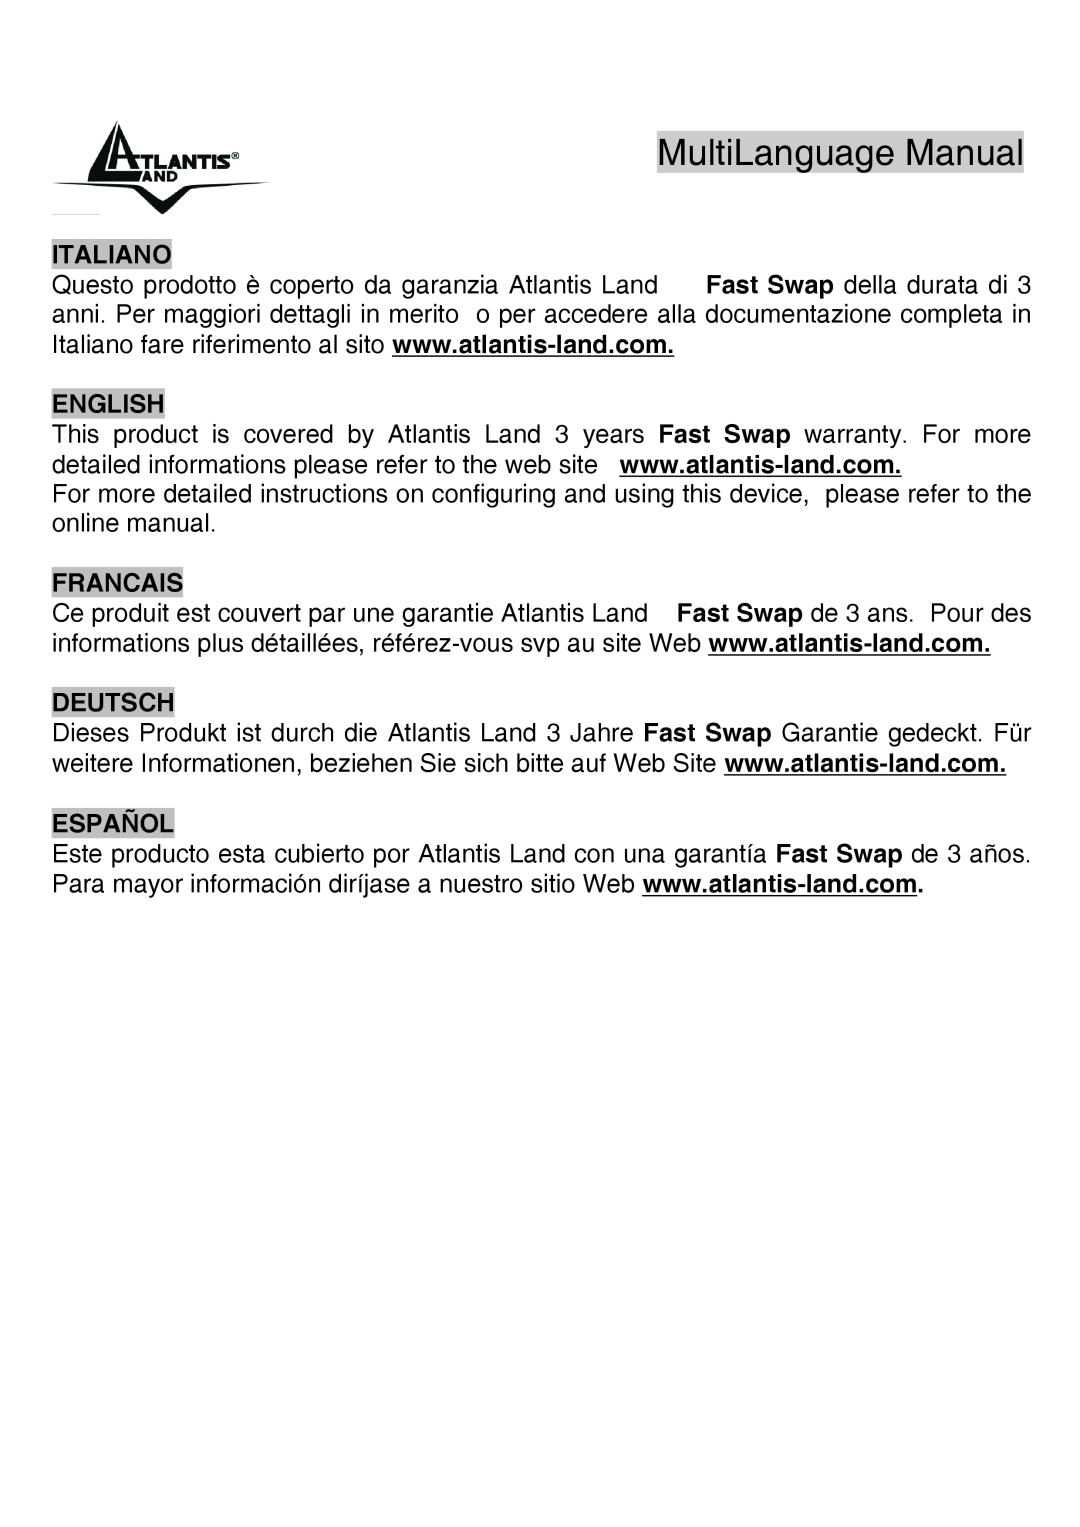 Atlantis Land A02-UP-W54 quick start MultiLanguage Manual Gu, Italiano, English, Francais, Deutsch, Español 